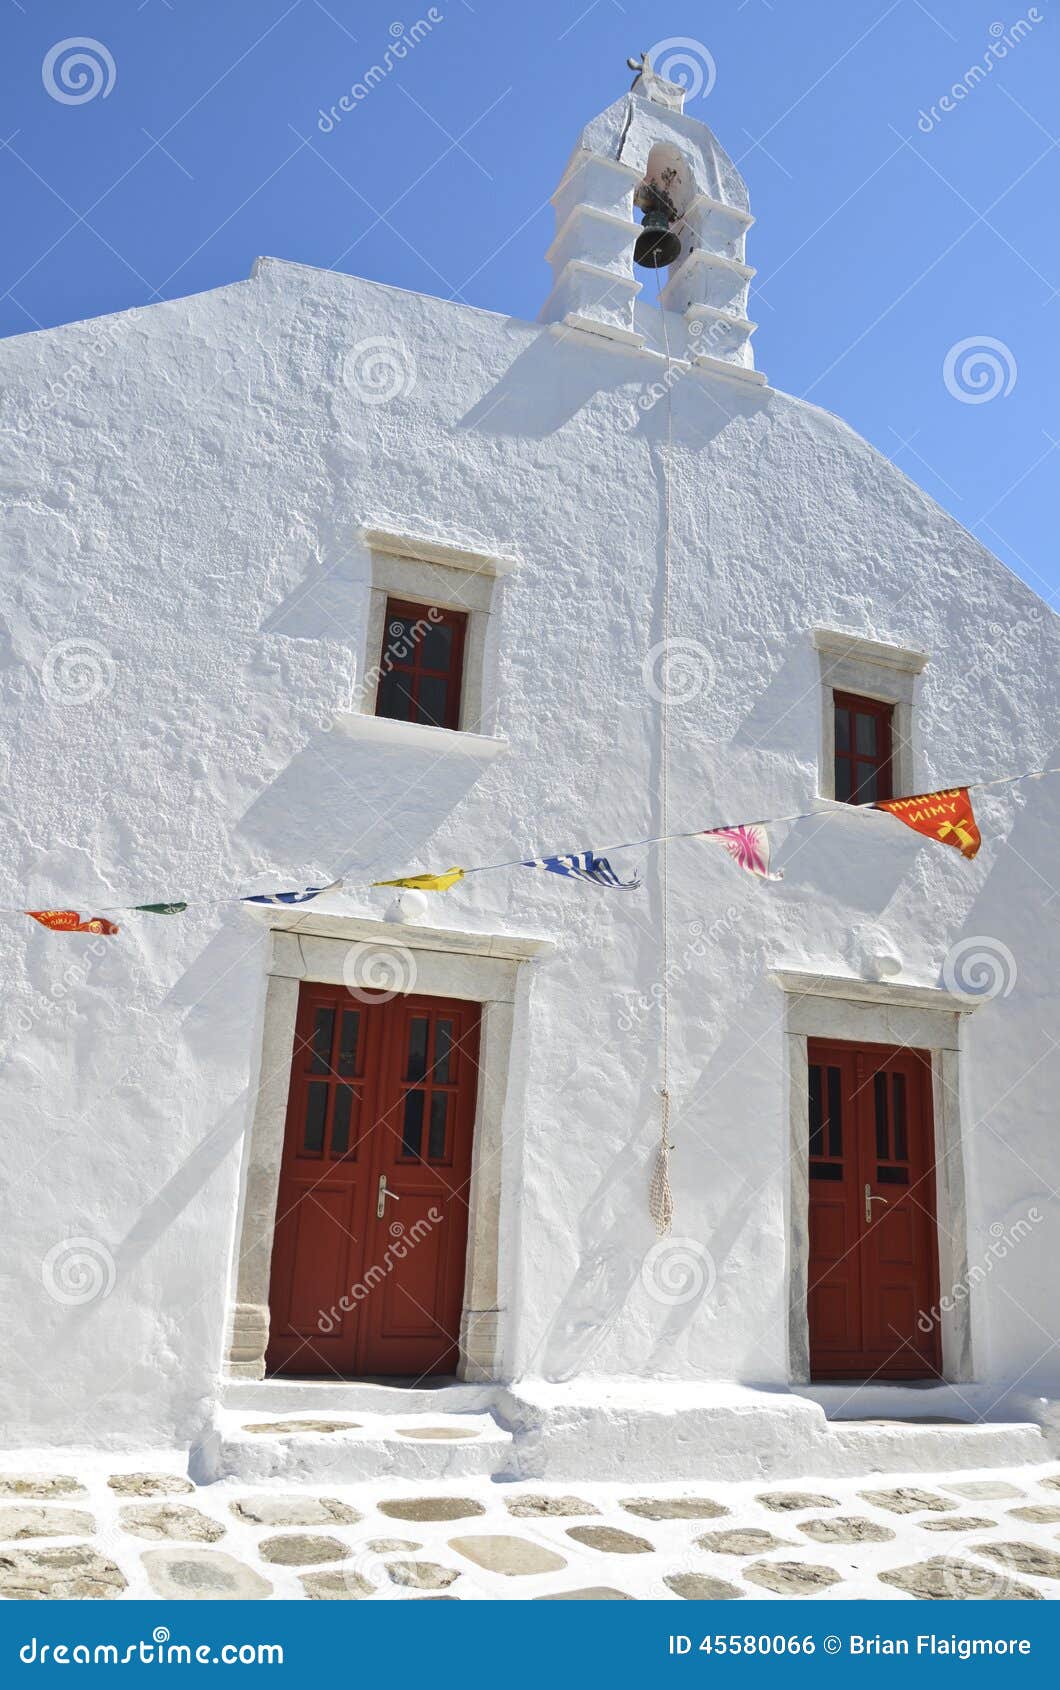 Mykonos, Greece. Mykonos (/ËˆmÉªkÉ™ËŒnÉ’s/, /ËˆmÉªkÉ™ËŒnoÊŠs/;[1] Greek: ÎœÏÎºÎ¿Î½Î¿Ï‚ [Ëˆmikonos]) is a Greek island, part of the Cyclades, lying between Tinos, Syros, Paros and Naxos. The economy relies heavily on tourism.